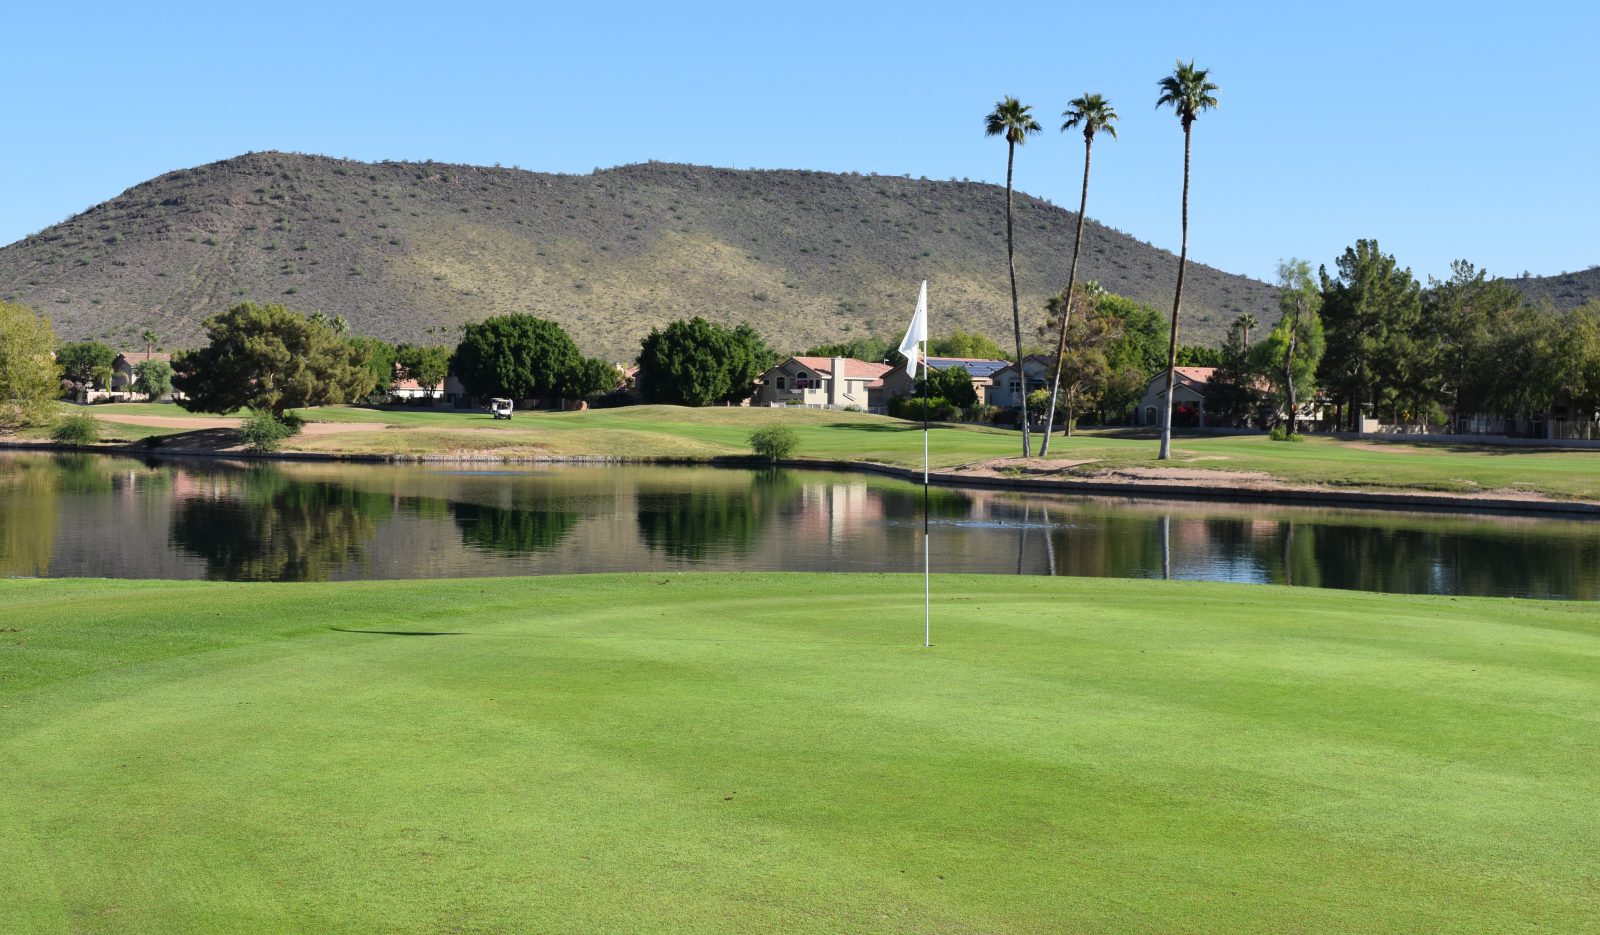 Golf Course management erosion control services - golf course ponds - west coast - california - arizona